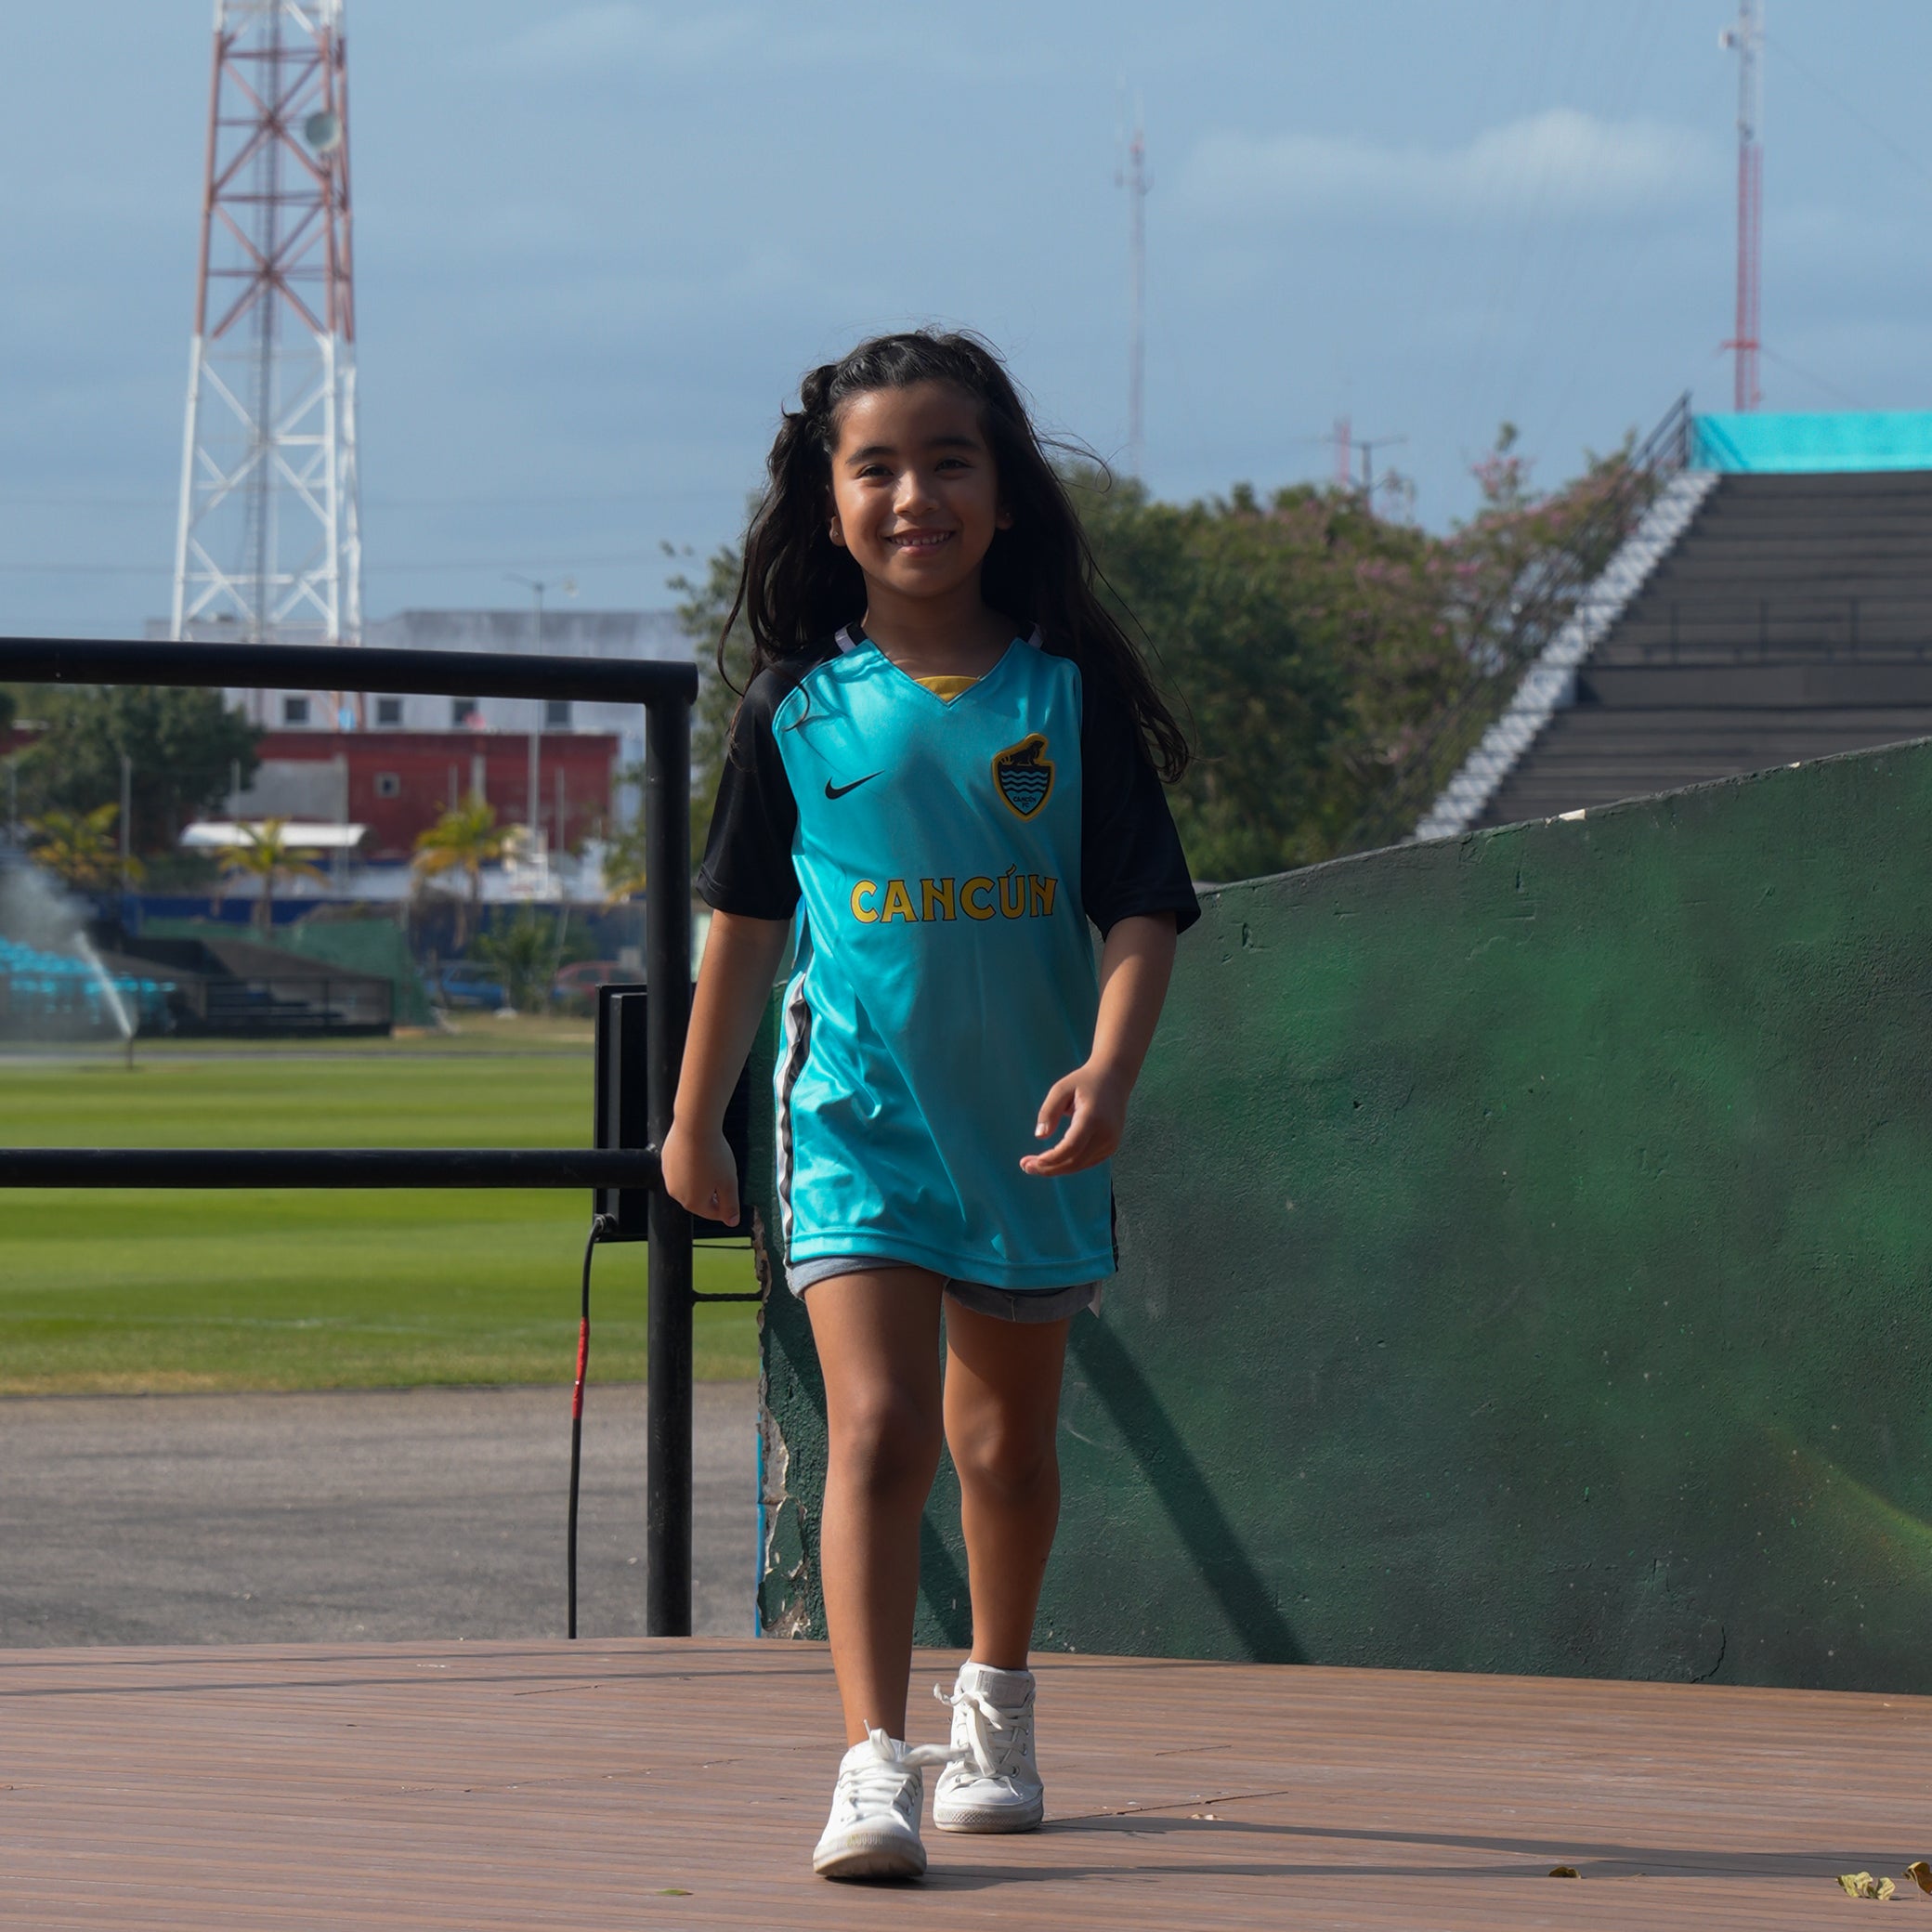 jersey futbol modern warrior para niño y niña cancun fc color turquesa